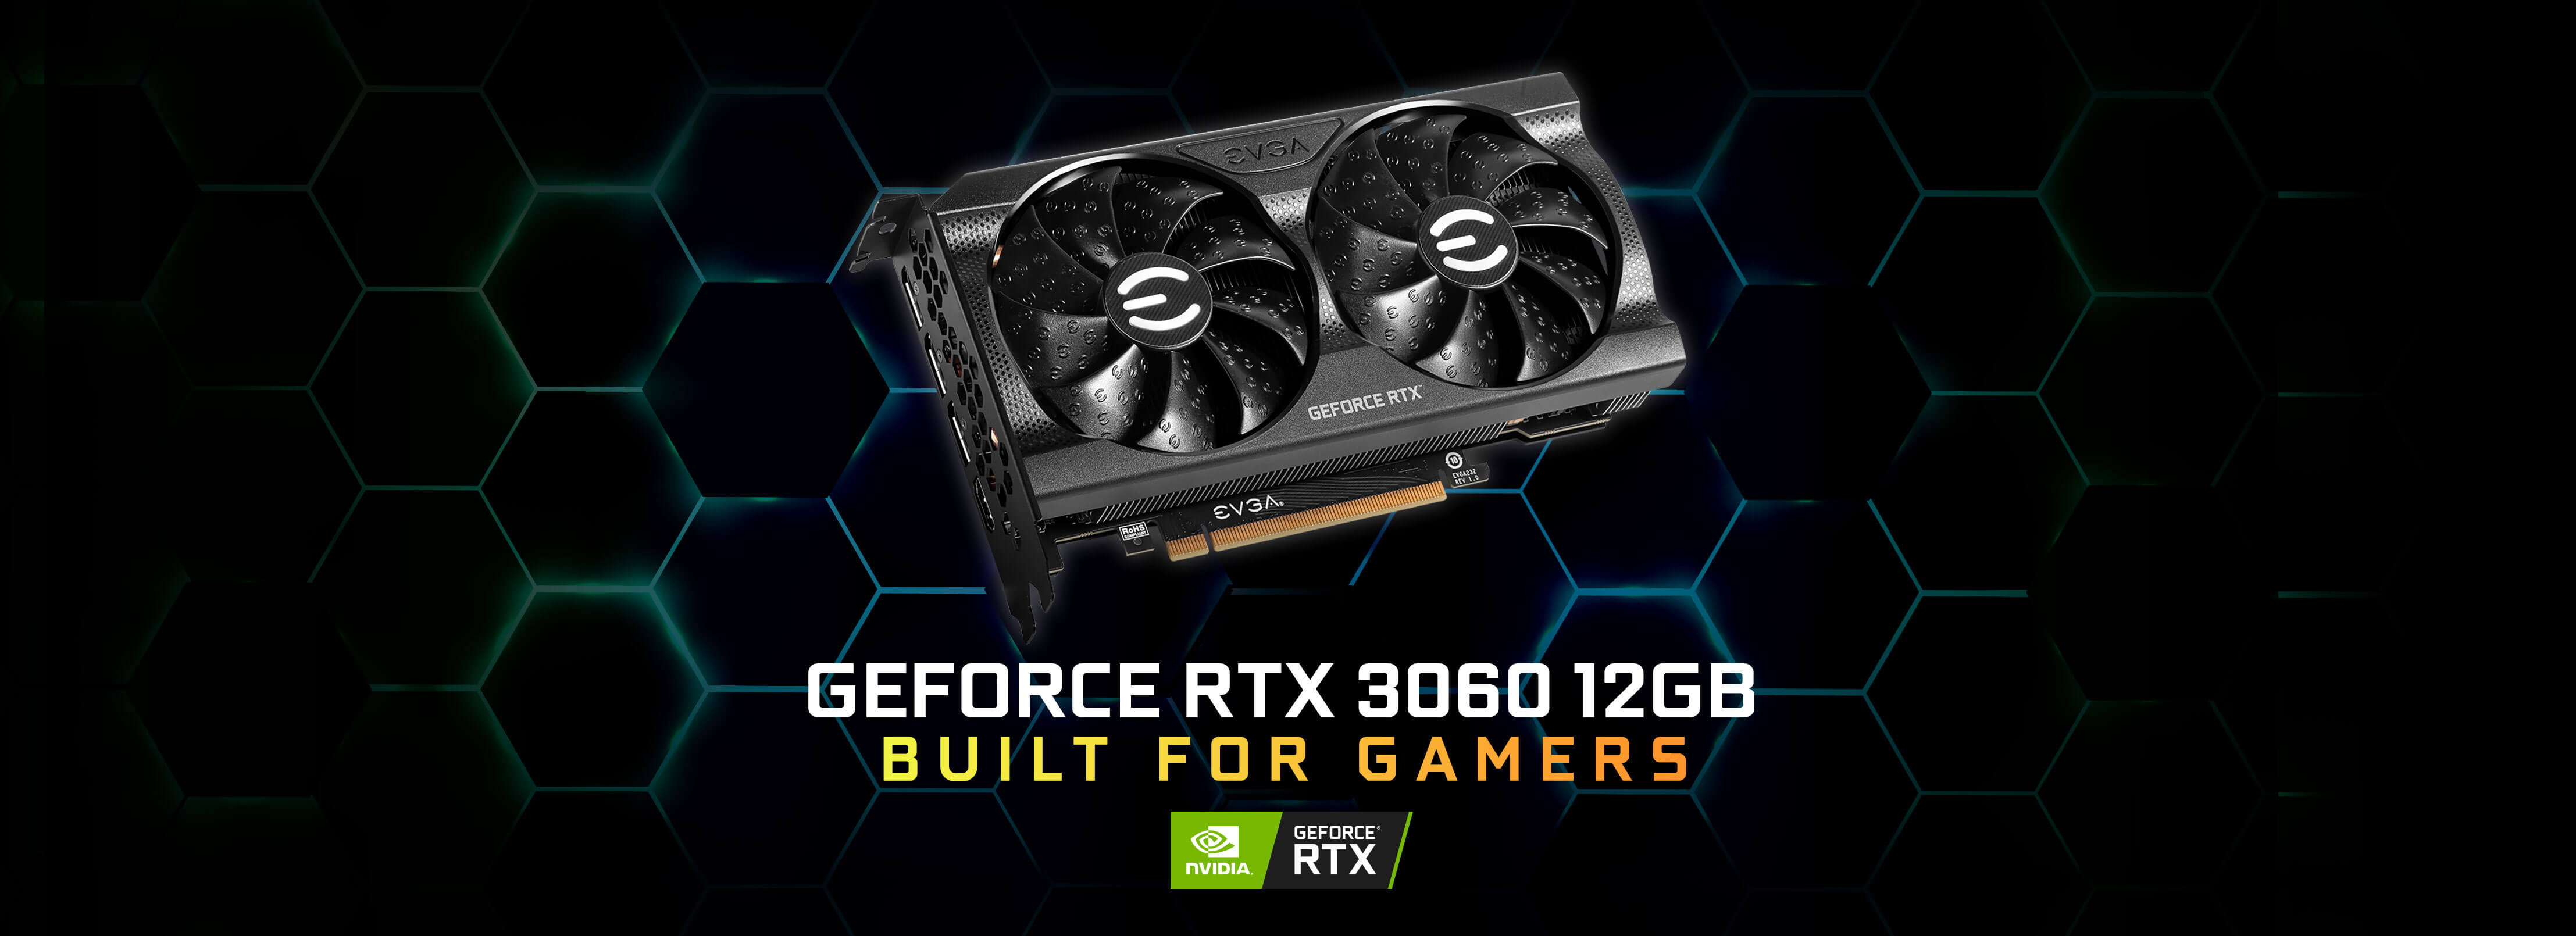 EVGA GeForce RTX 3060 12GB